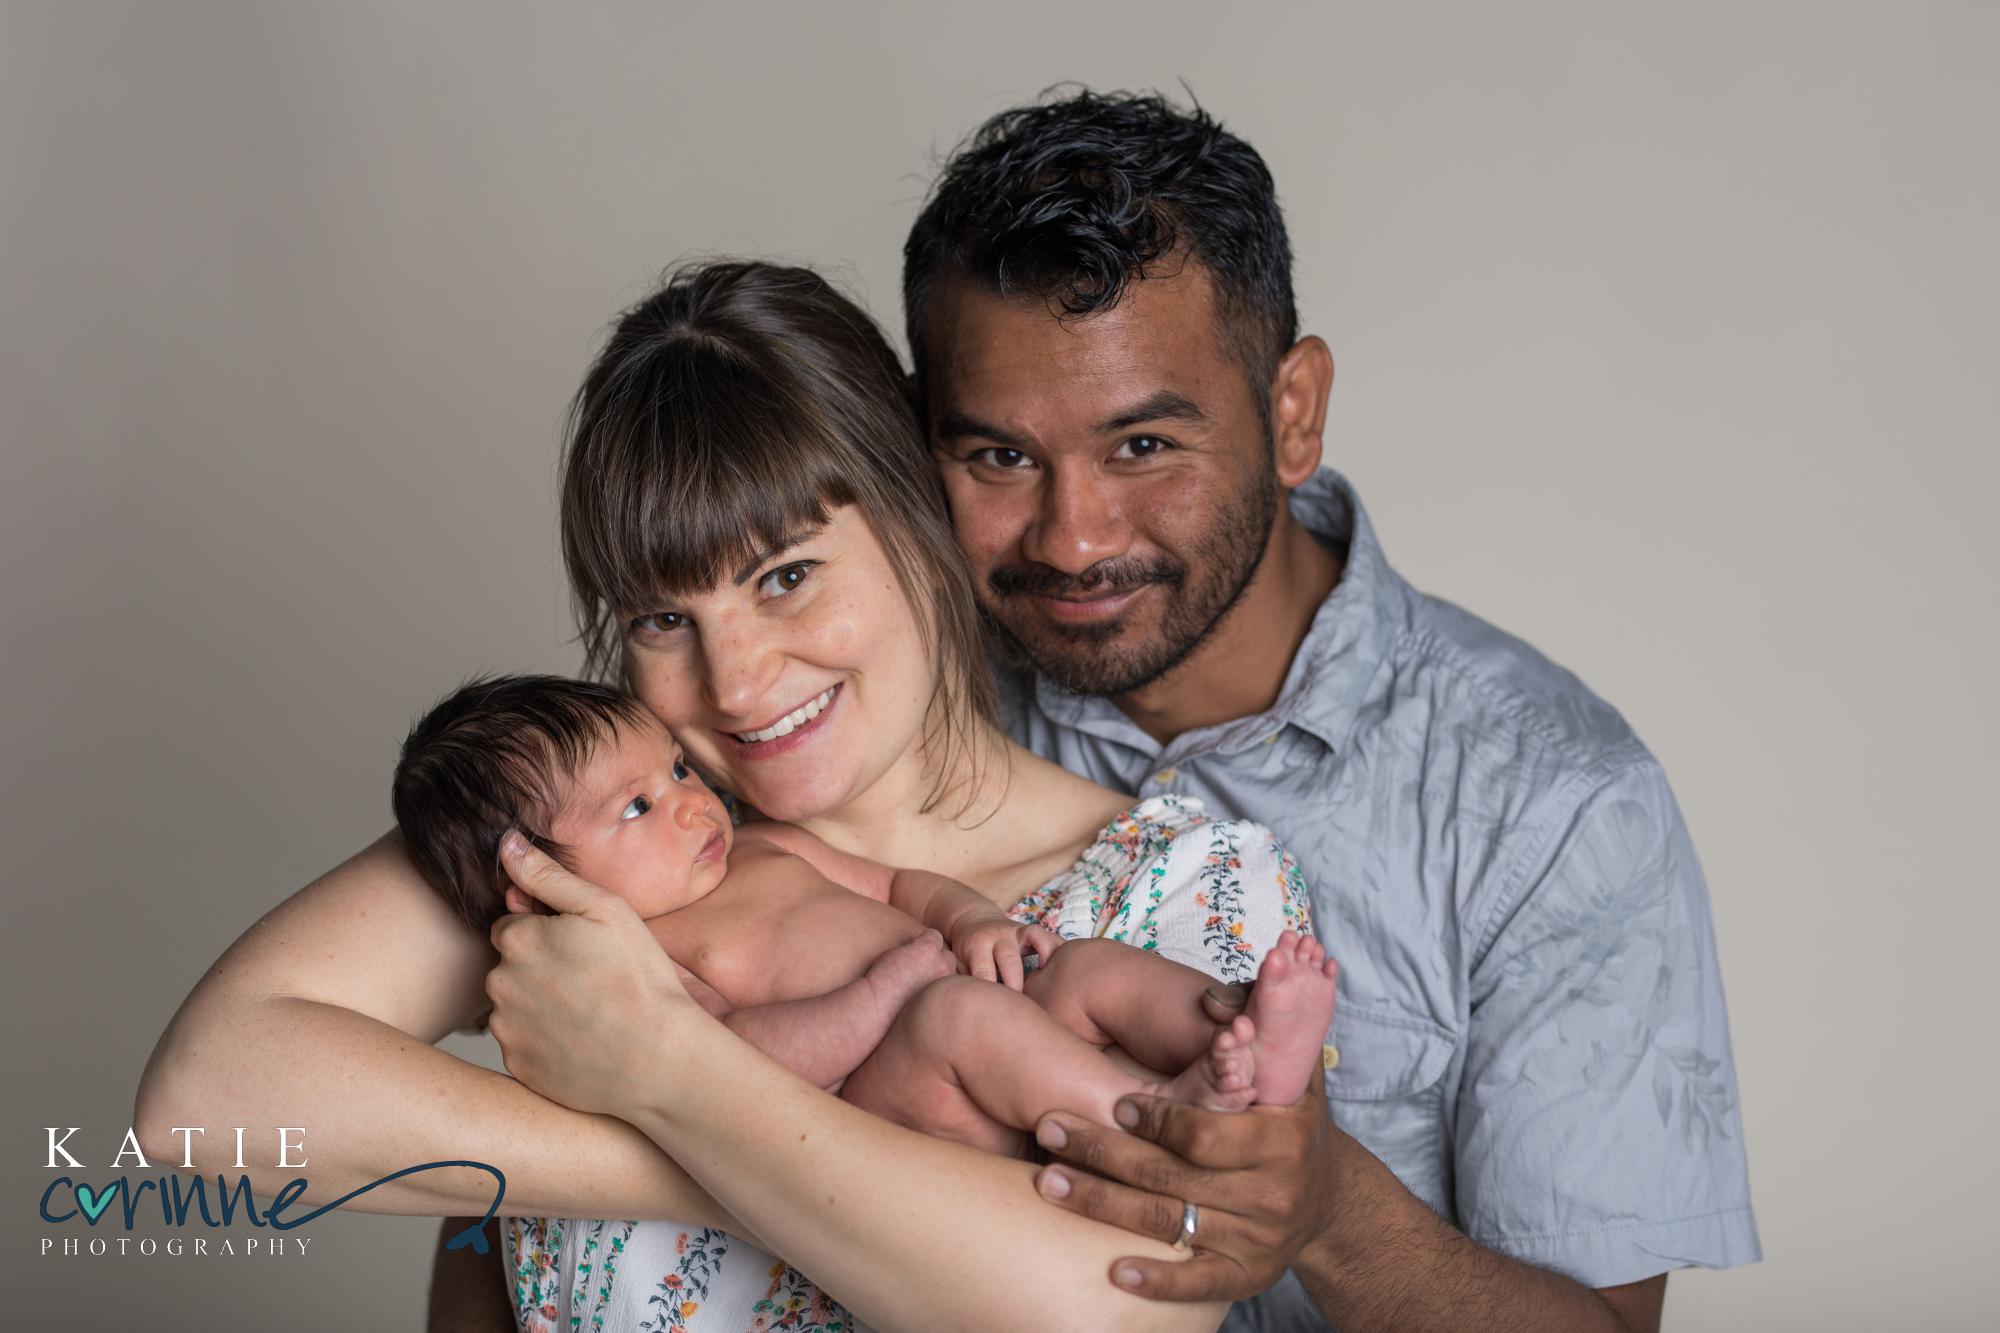 Colorado springs couple holds newborn baby girl